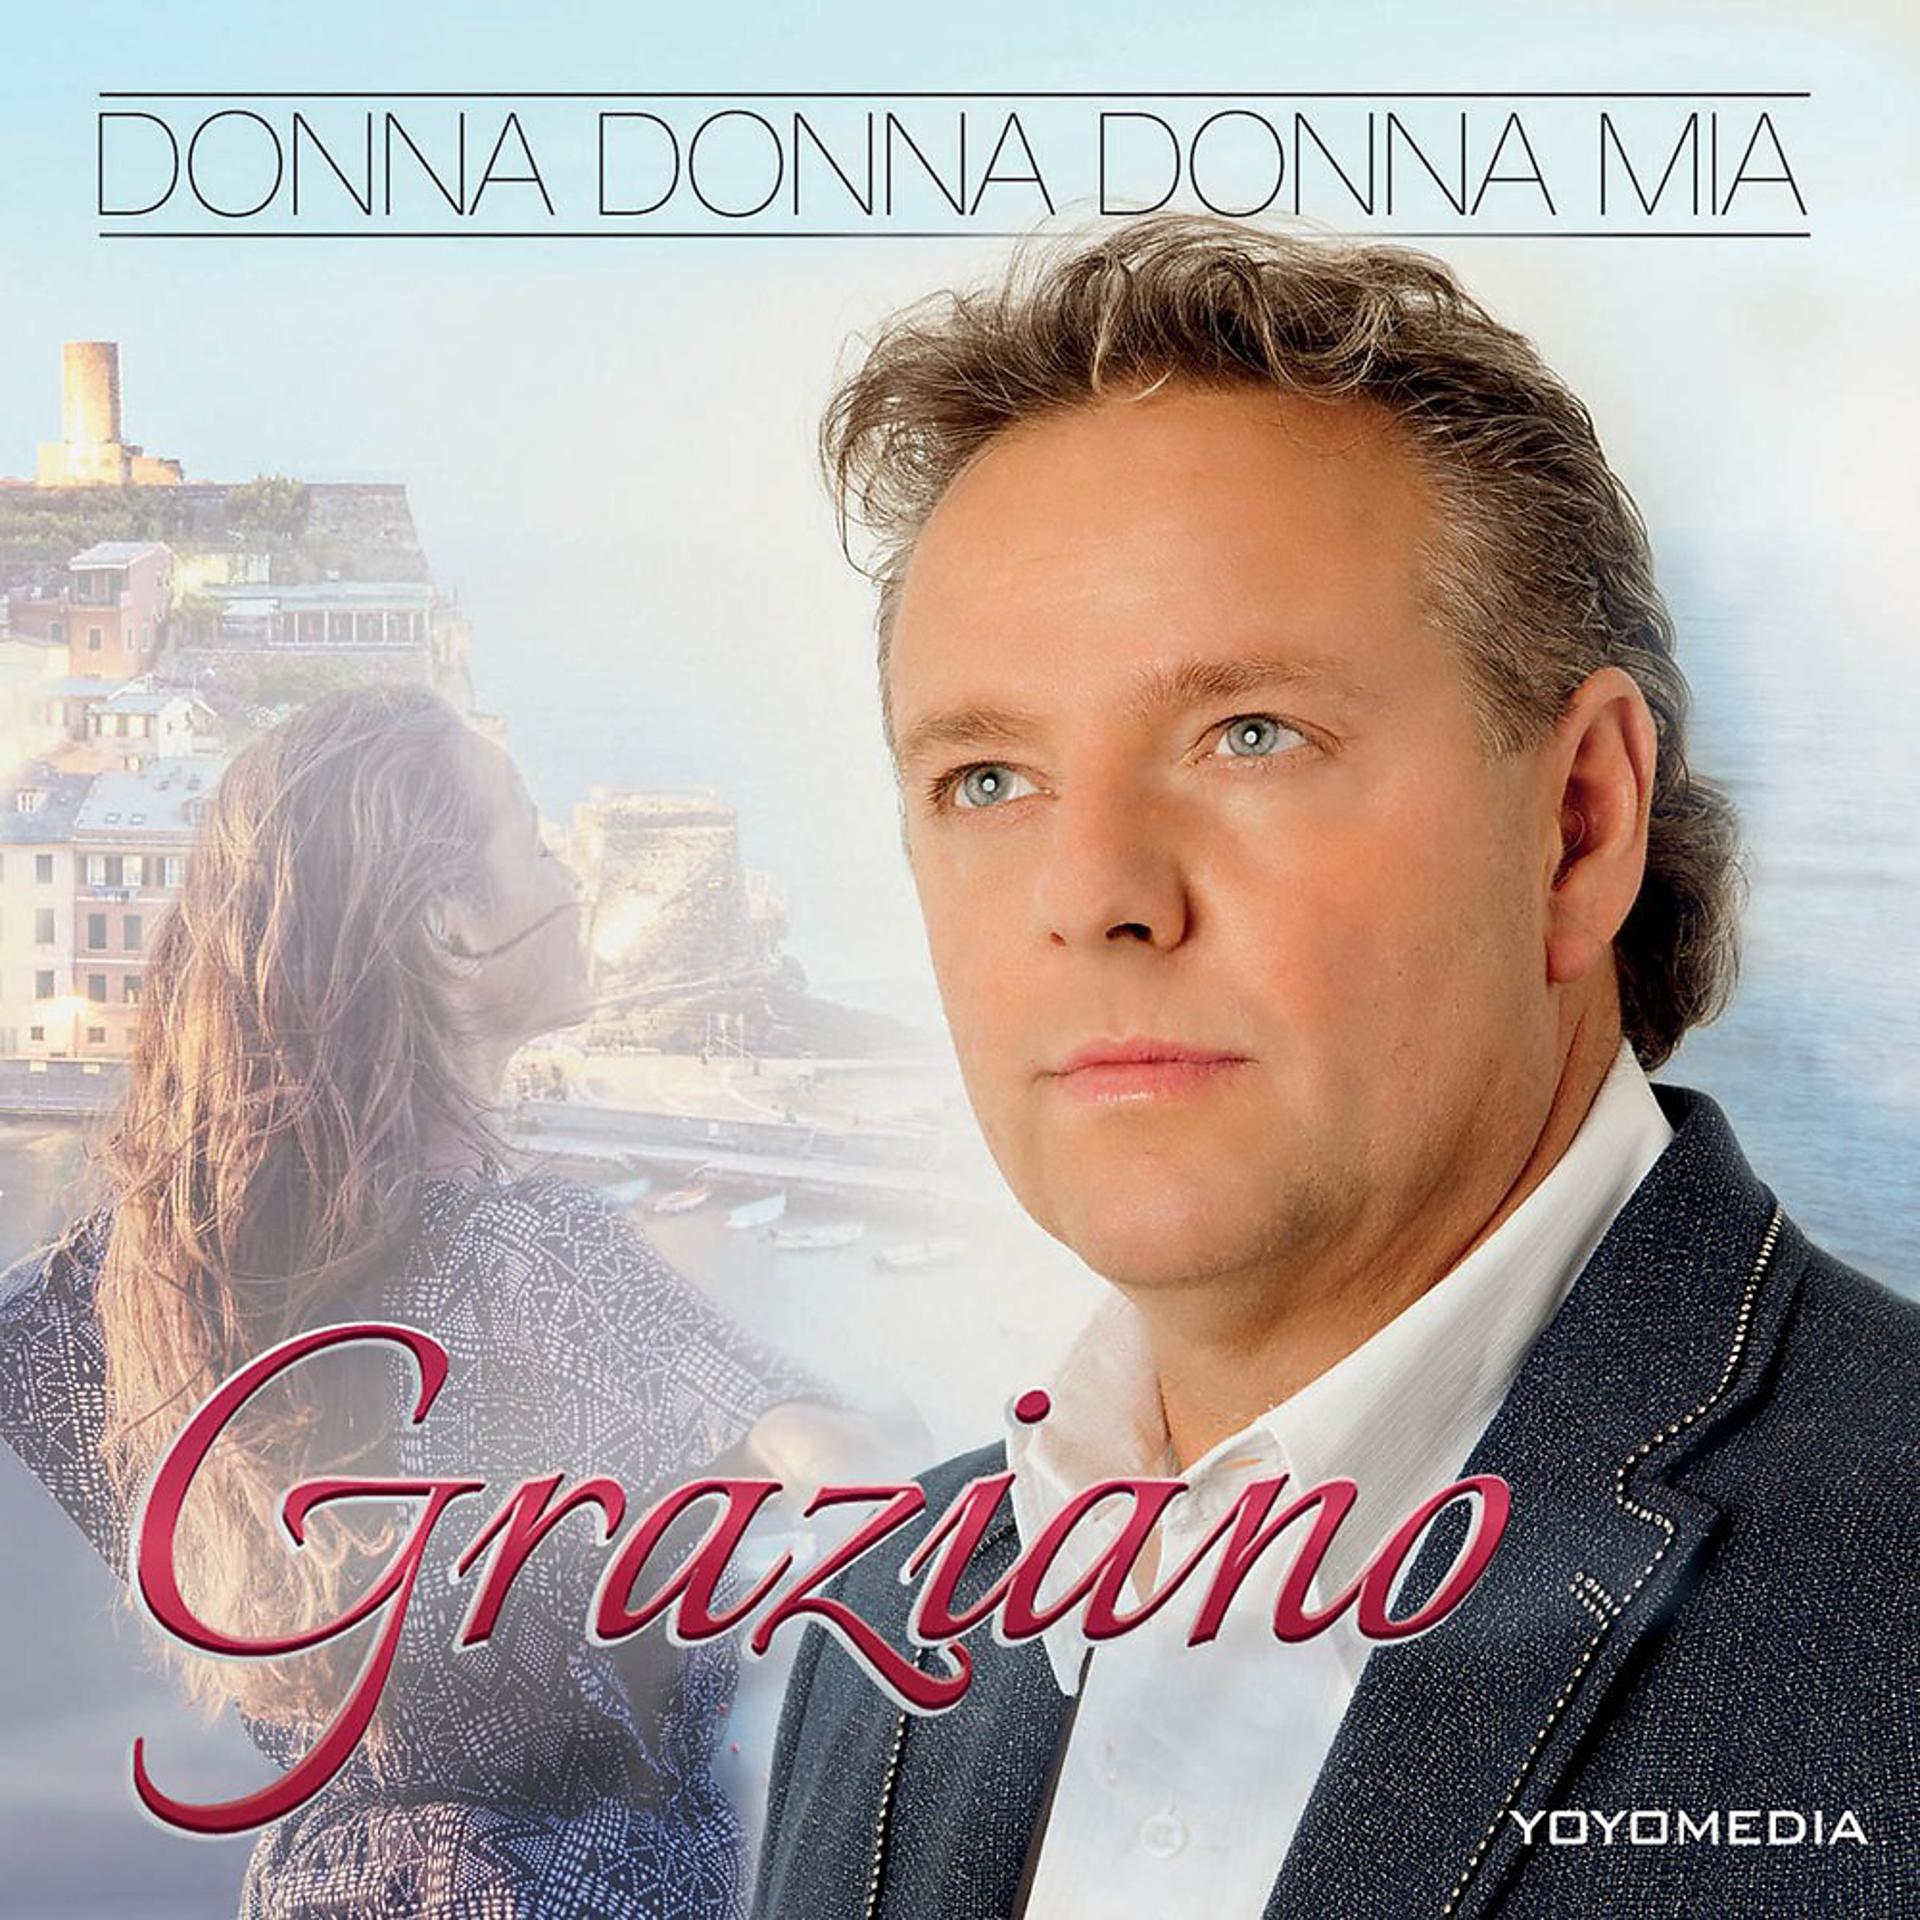 Постер к треку Graziano - Donna Donna Donna Mia (Radio Version)